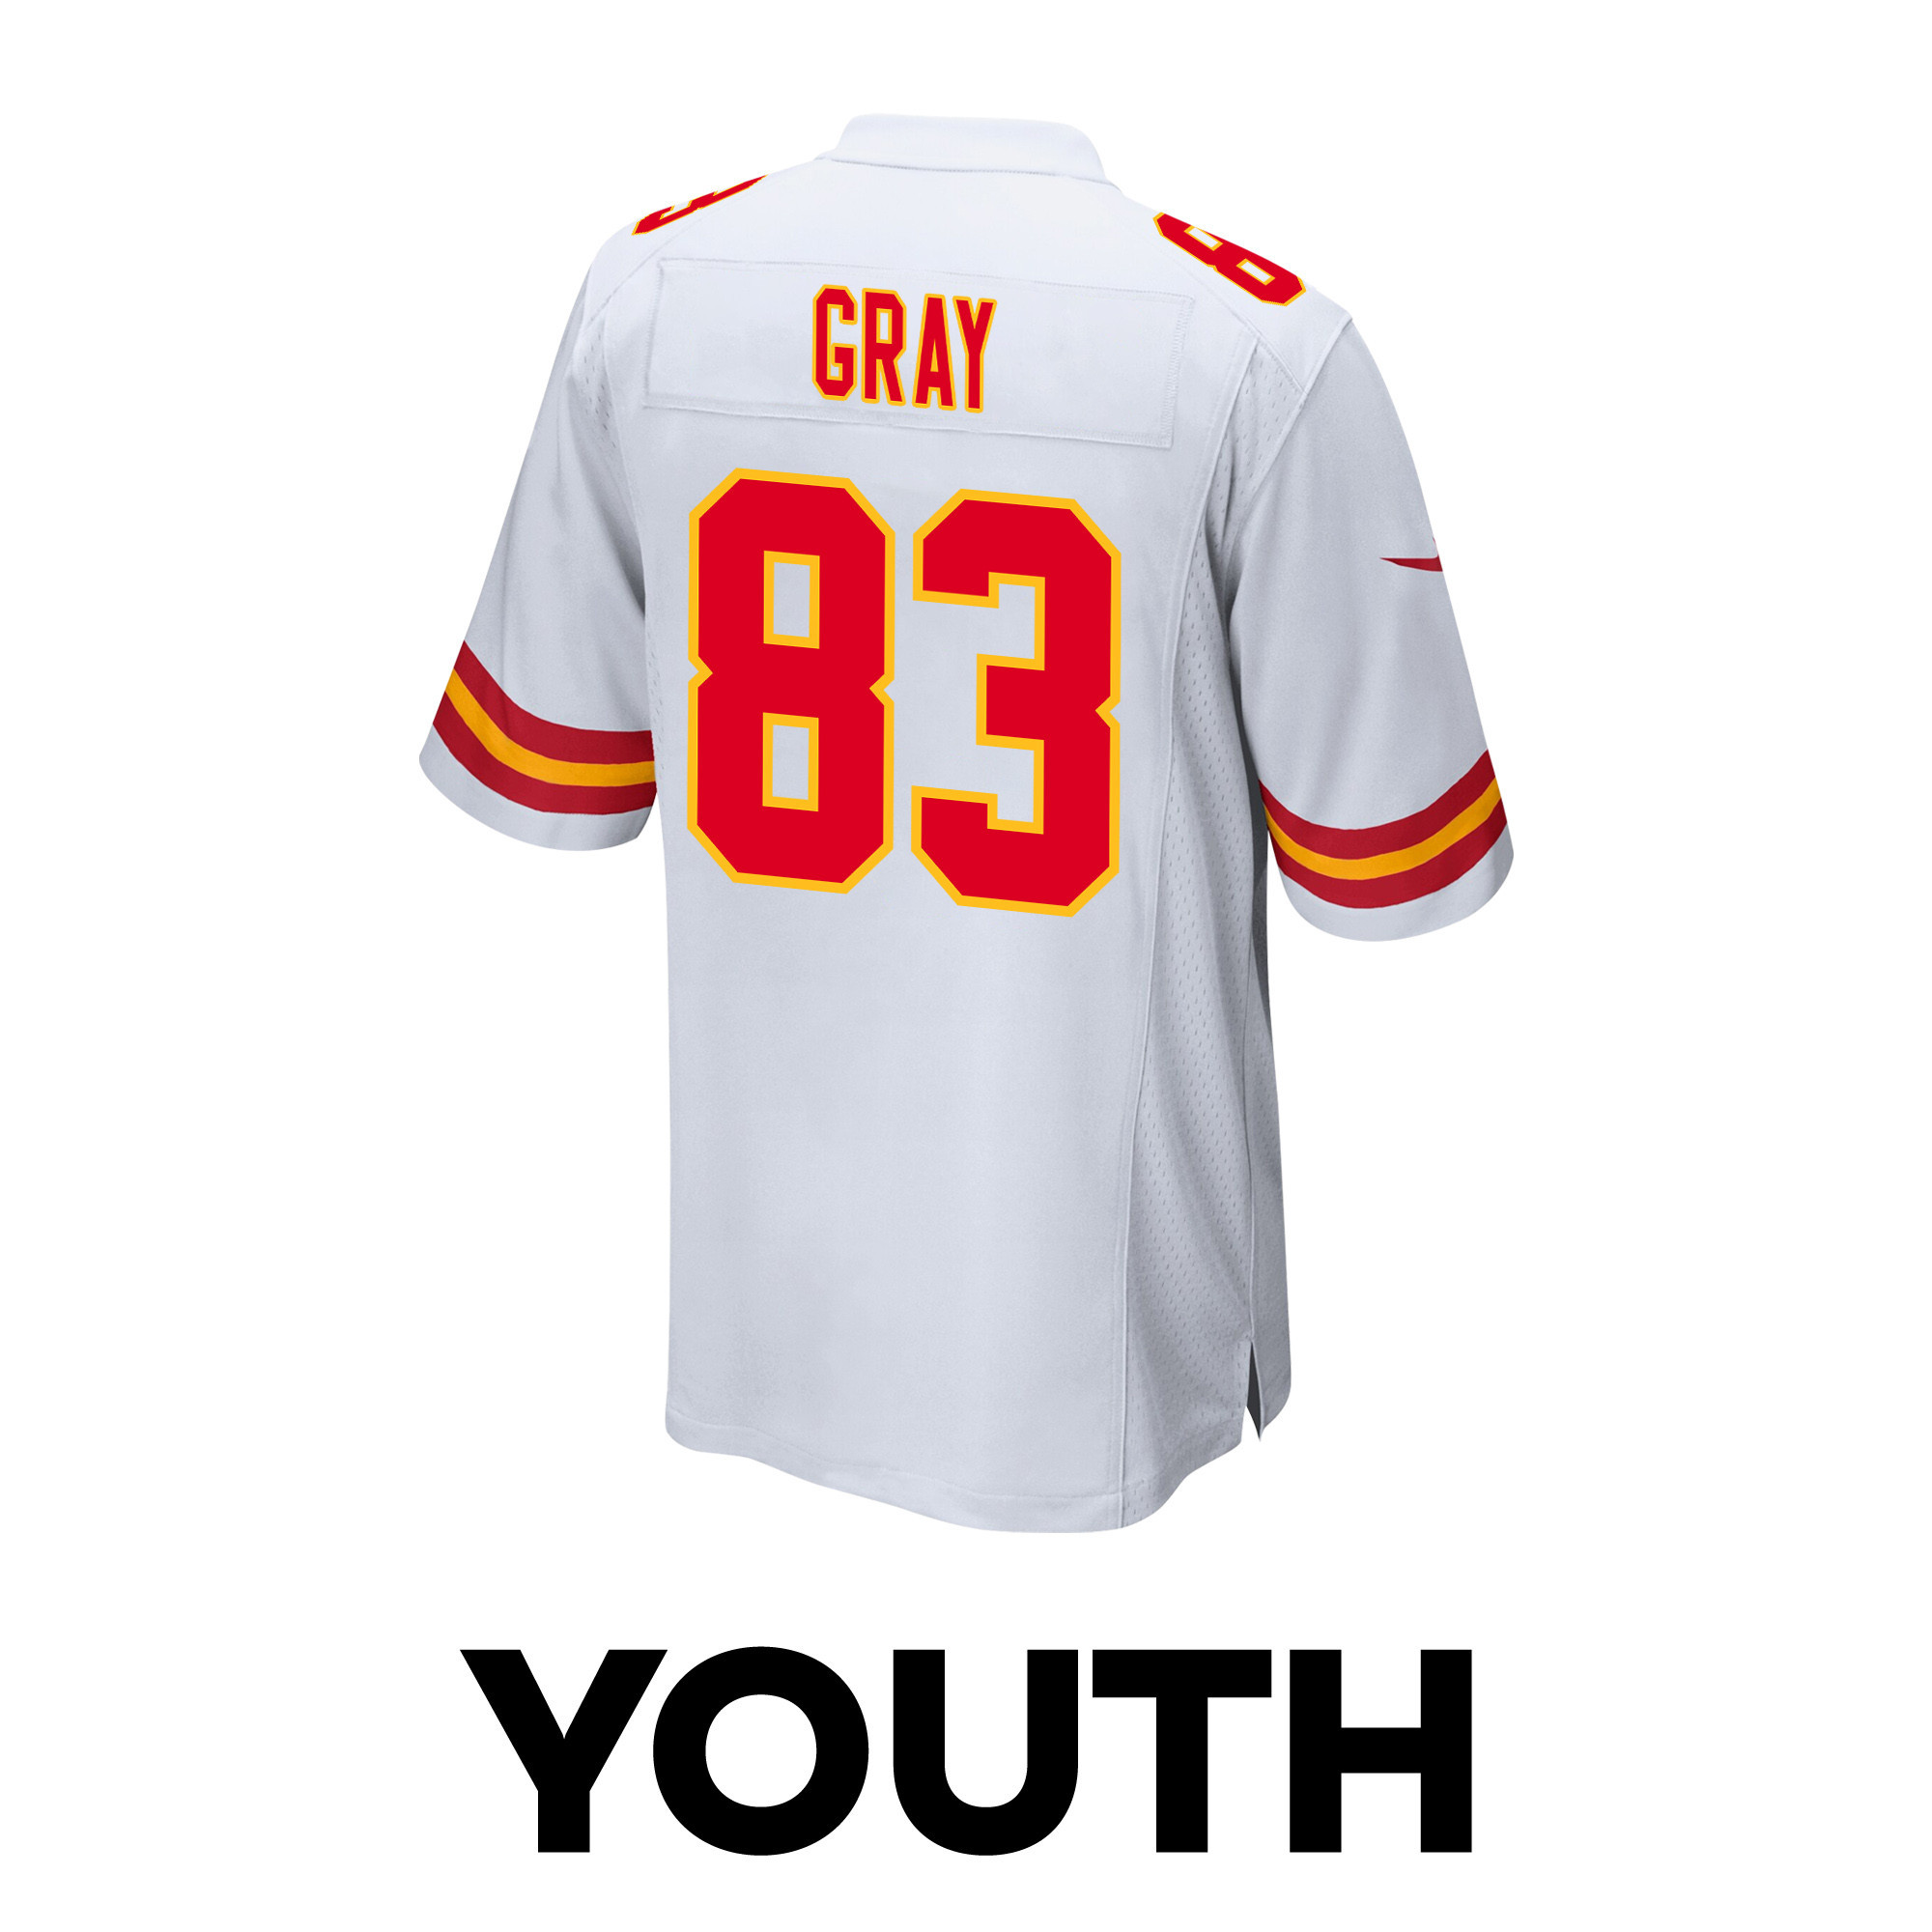 Noah Gray 83 Kansas City Chiefs Super Bowl LVIII Champions 4X Game YOUTH Jersey - White